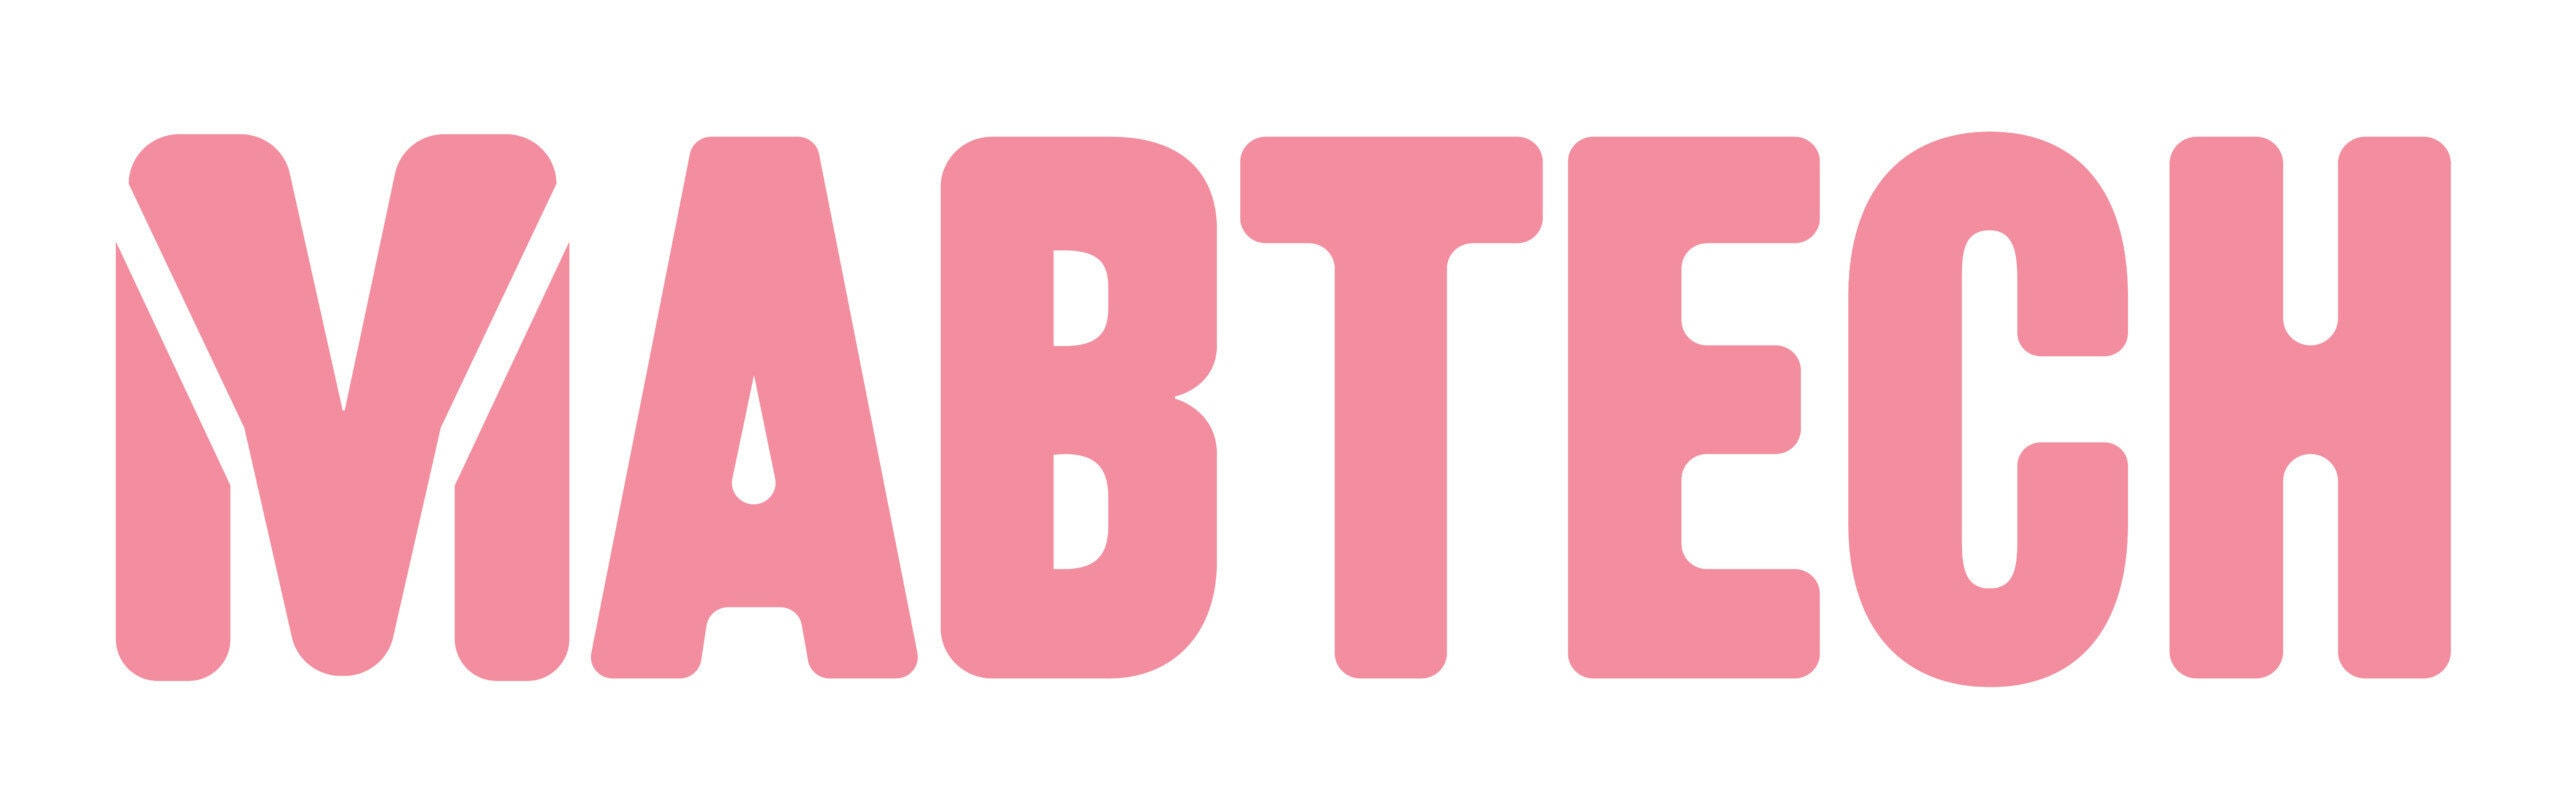 Logo Mabtech Pink Margin